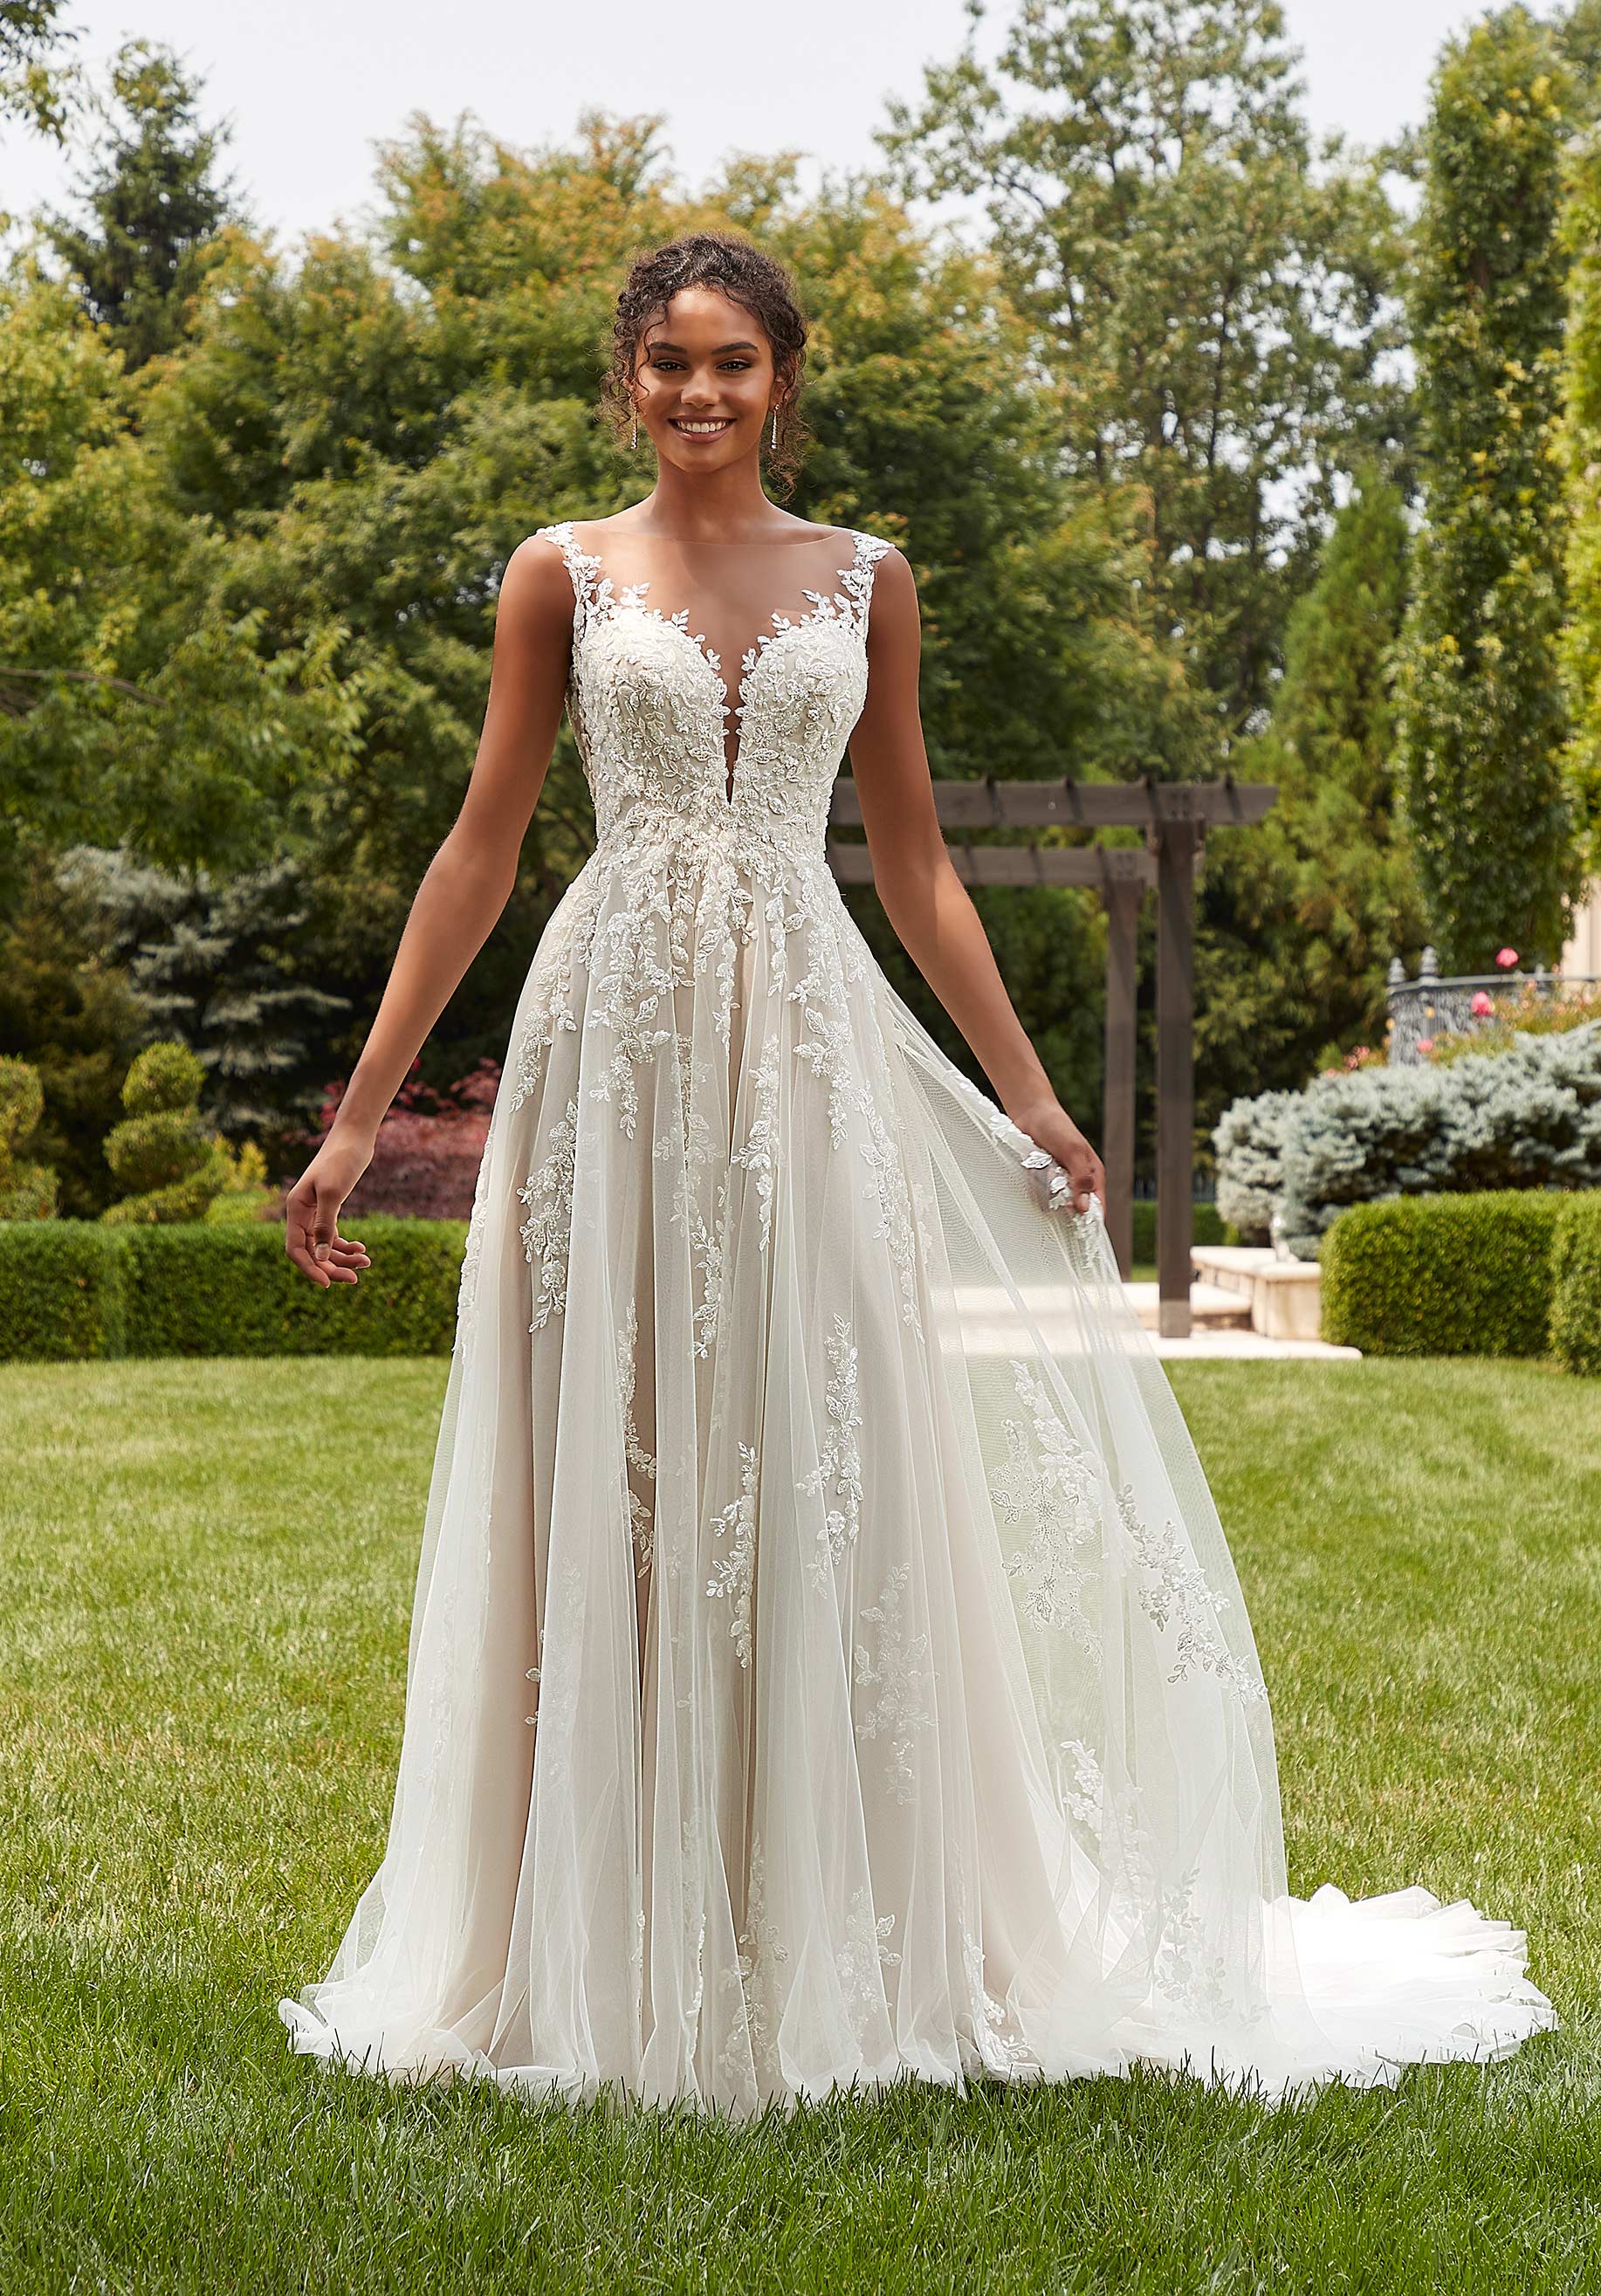 Love Wedding Dress: Simple long dress with a deep V neckline